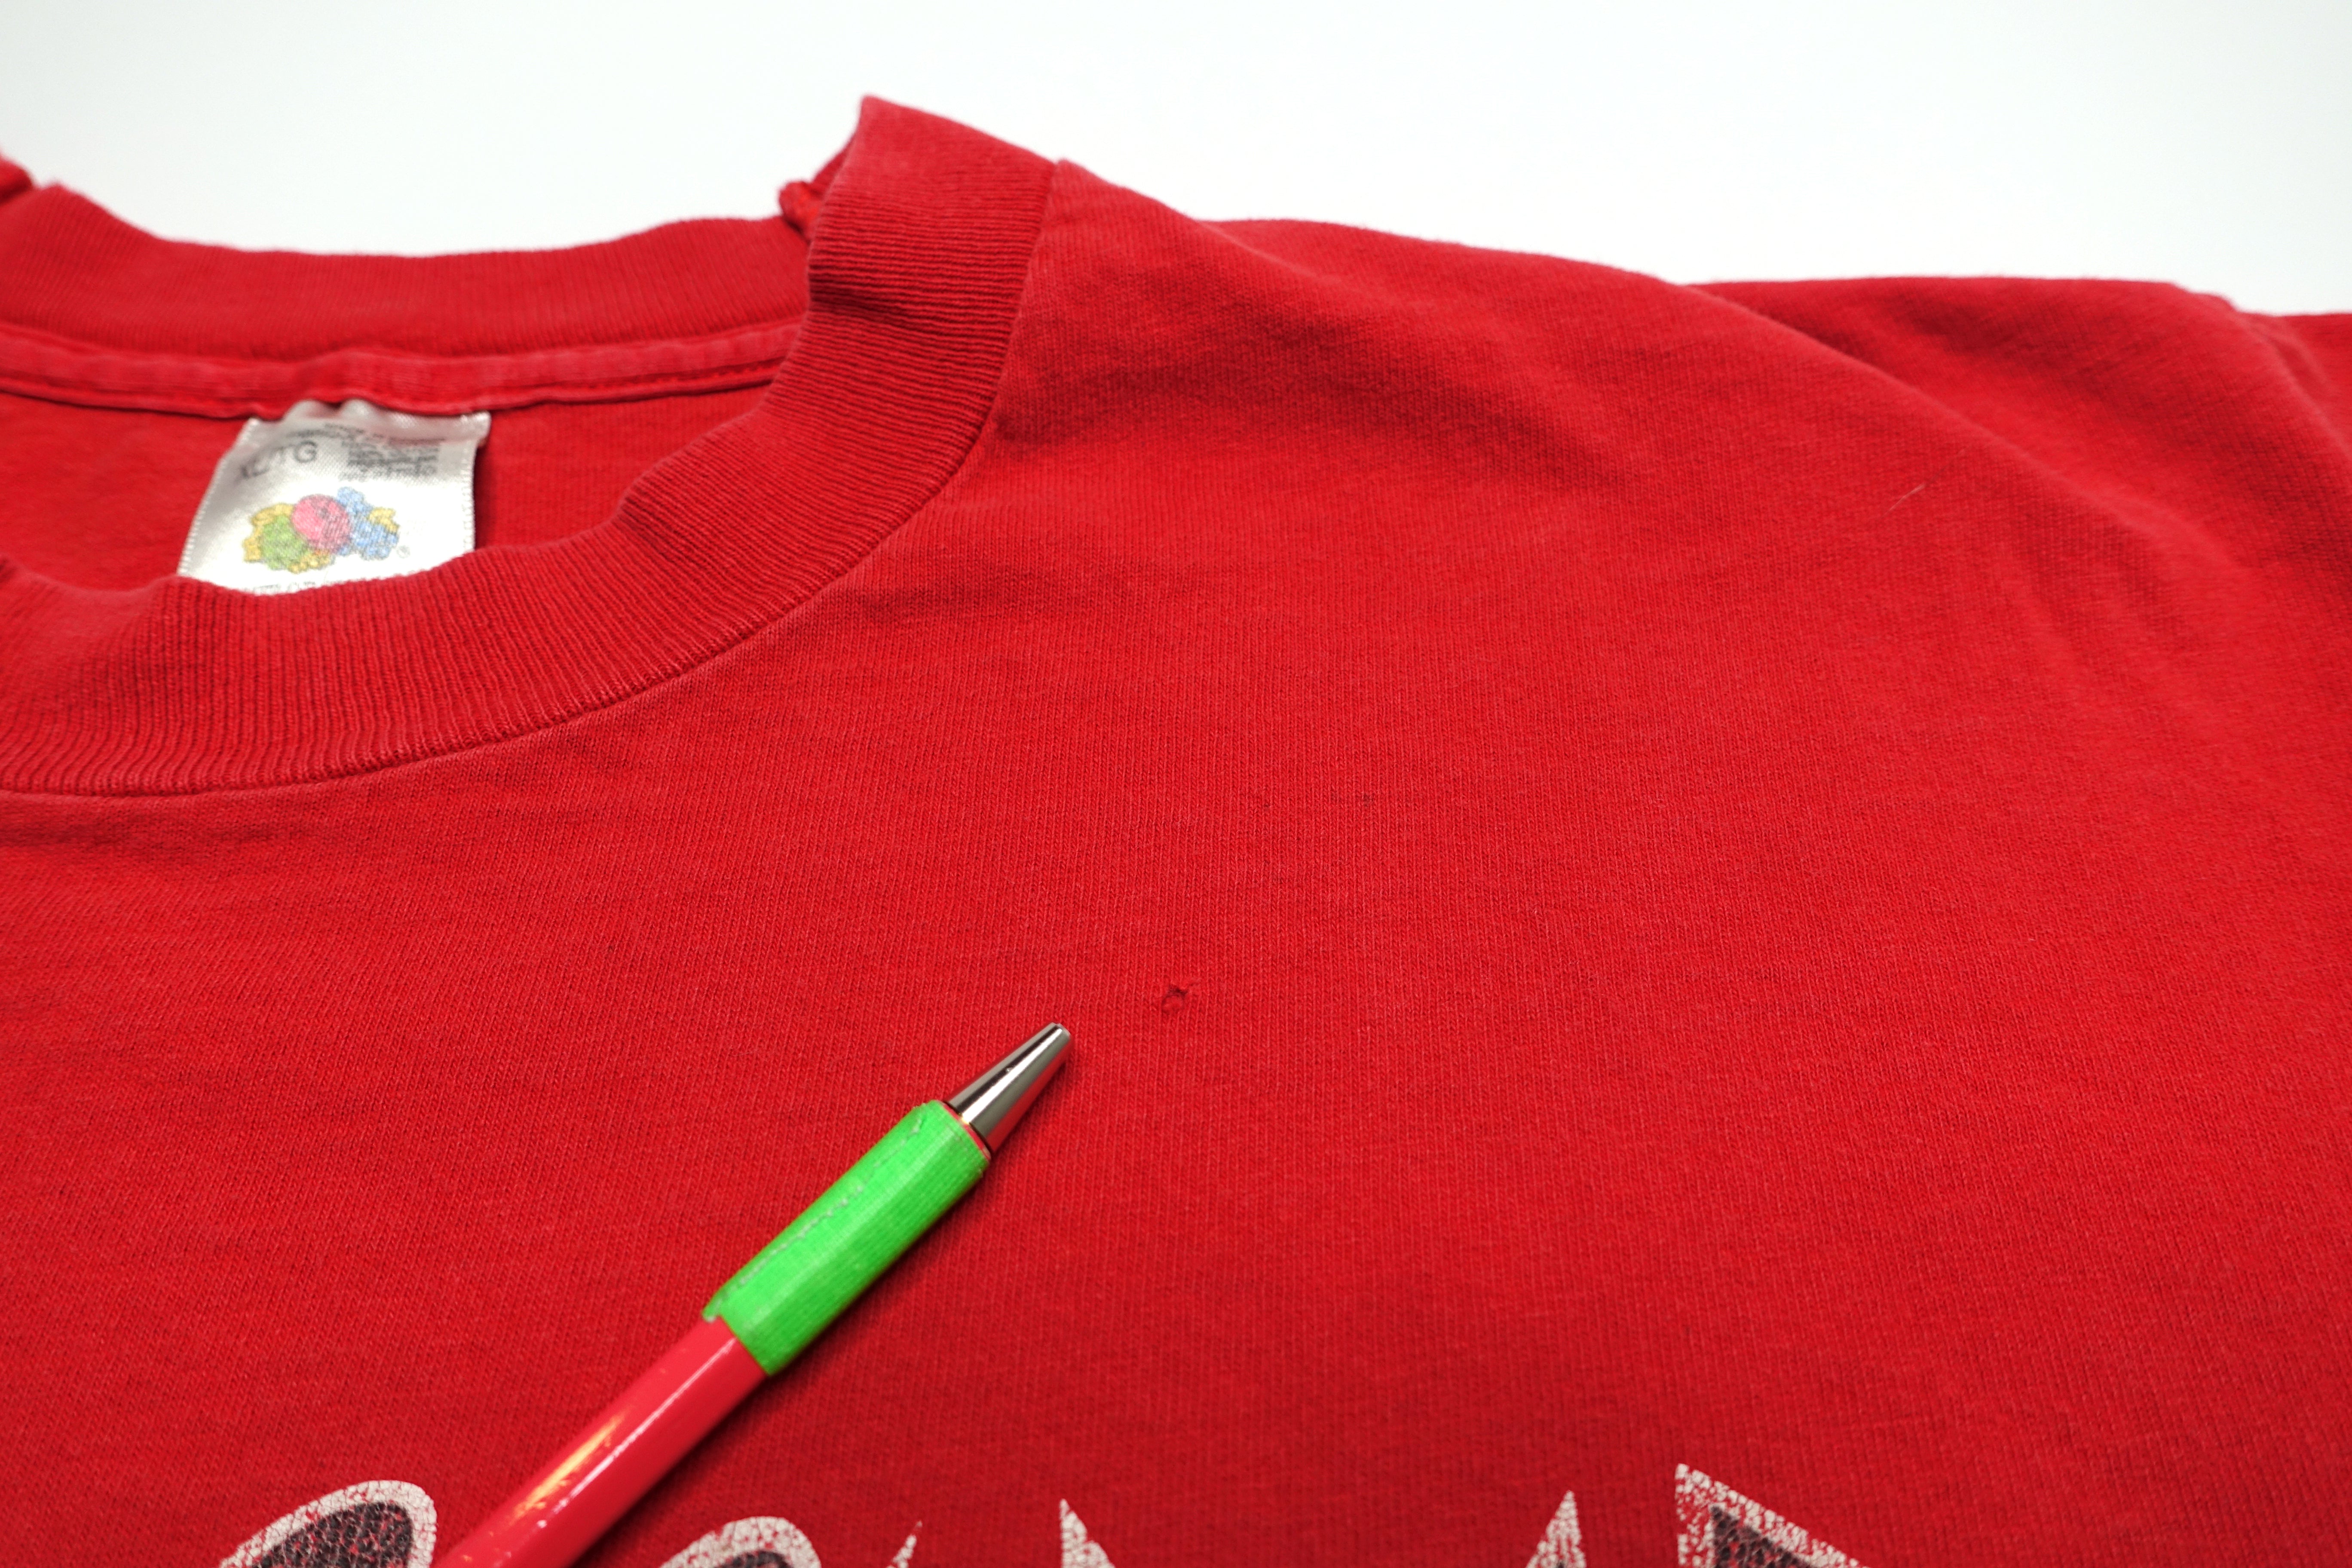 Chixdiggit! - Chixdiggit! 90's Tour Shirt (Red) Size XL